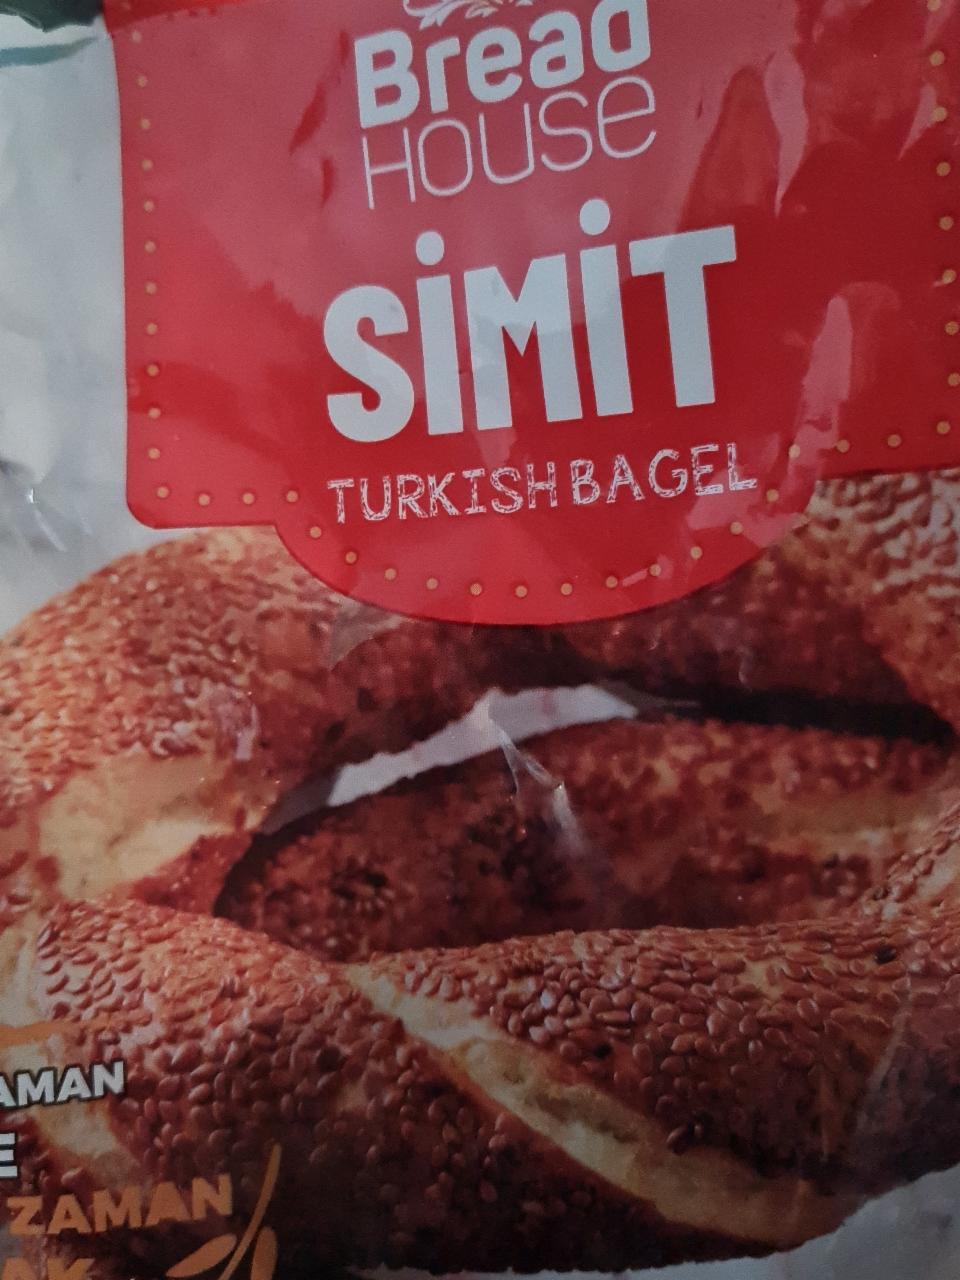 Fotografie - Turkish Bagel Simit Bread House